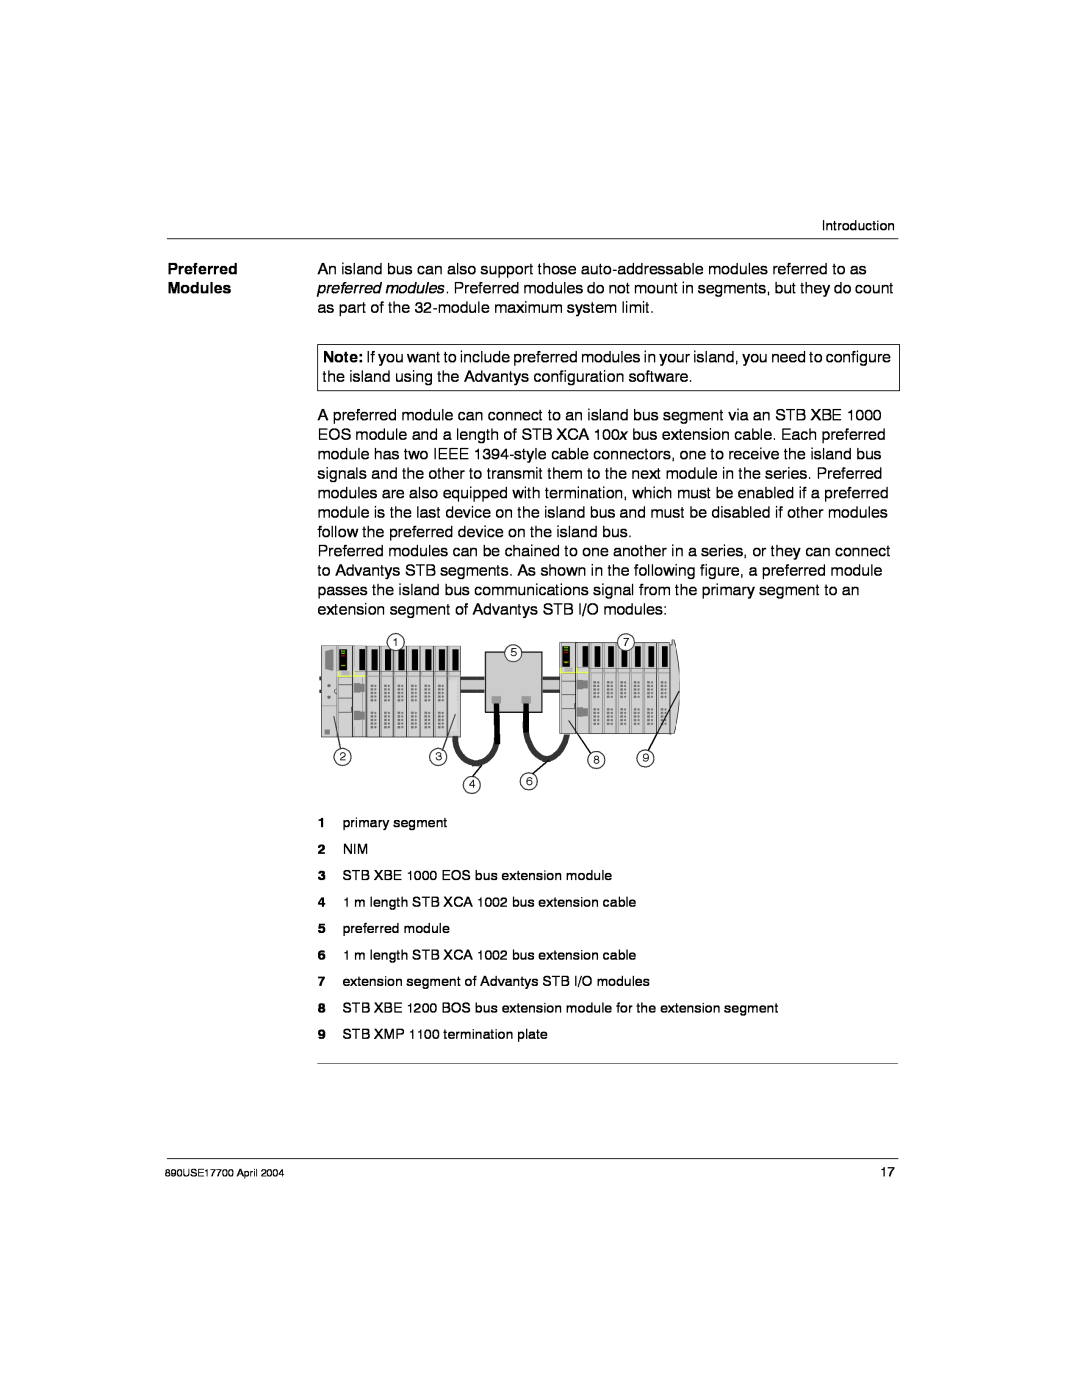 Schneider Electric 890USE17700 manual Preferred, Modules 